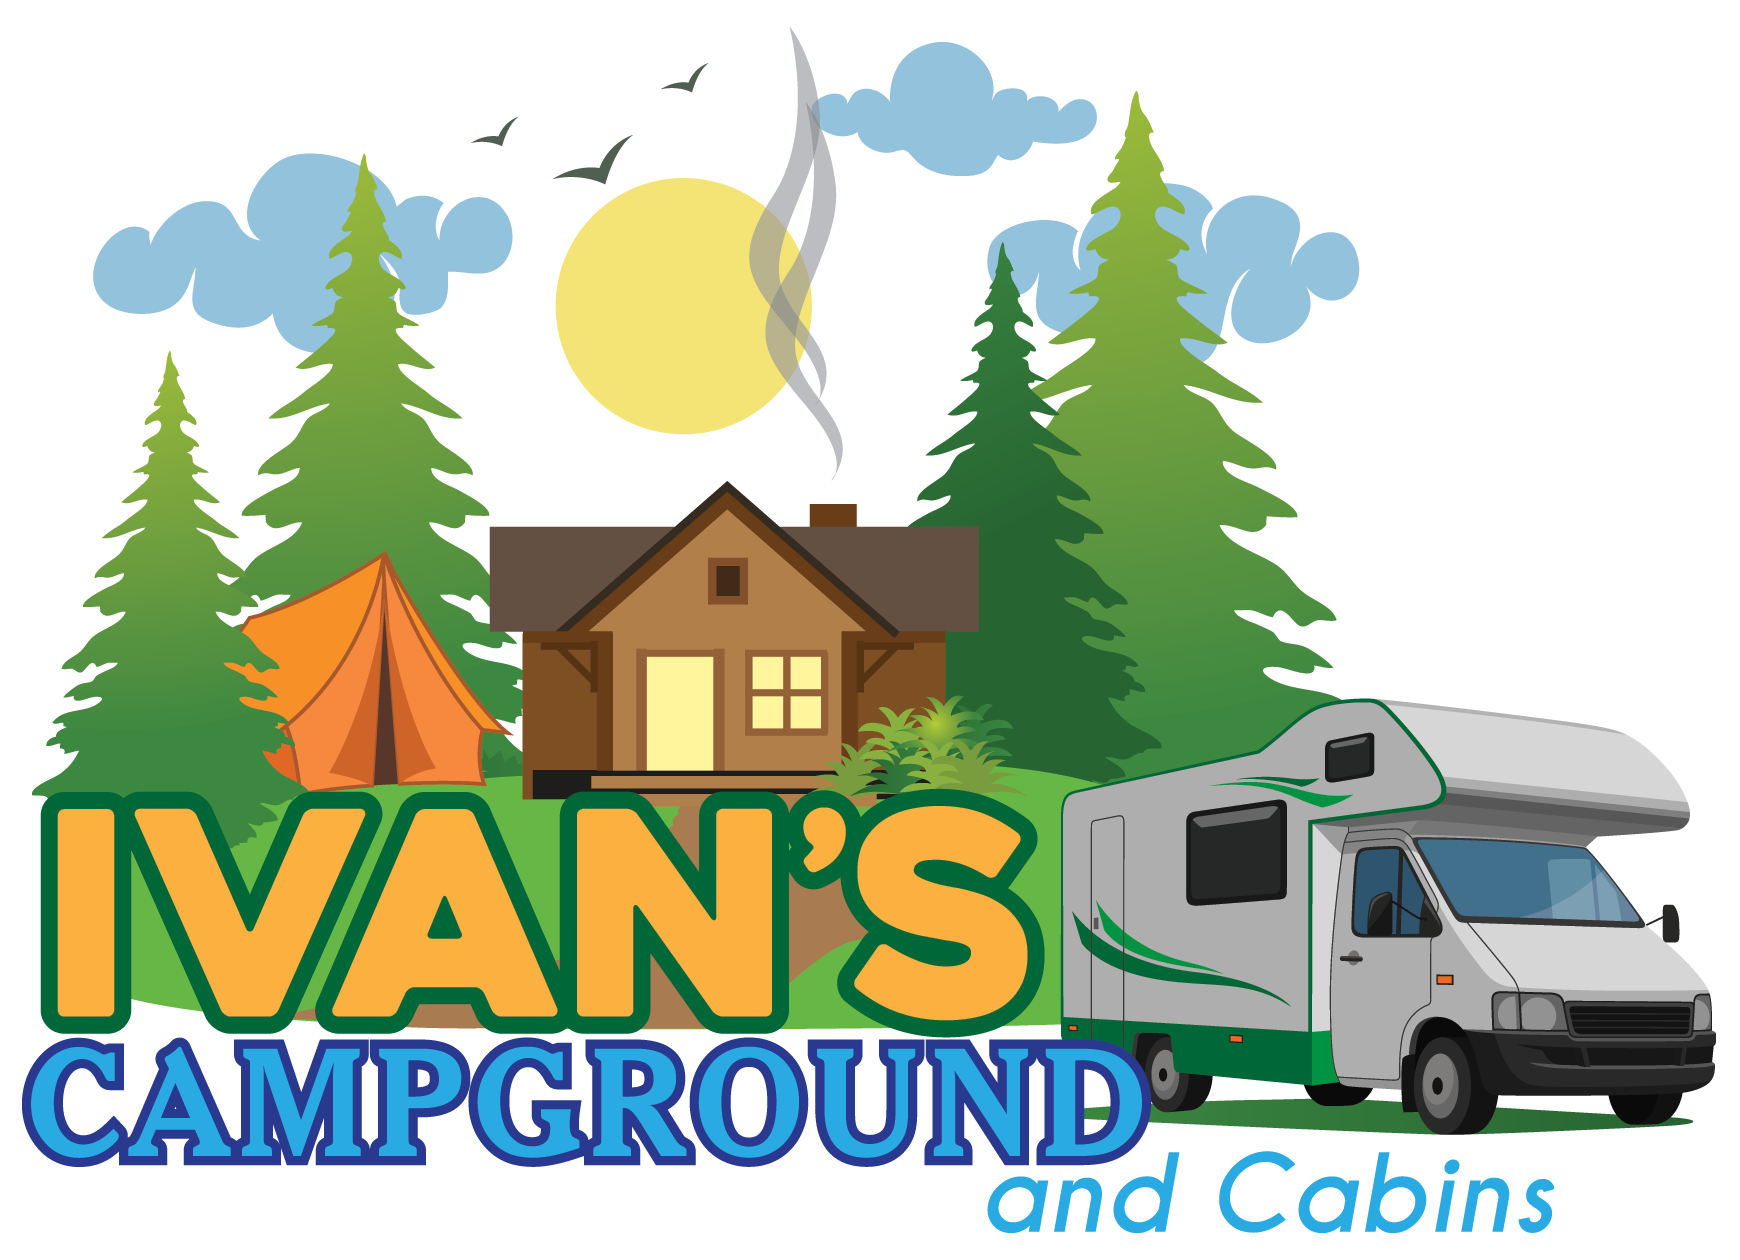 Ivans Campground